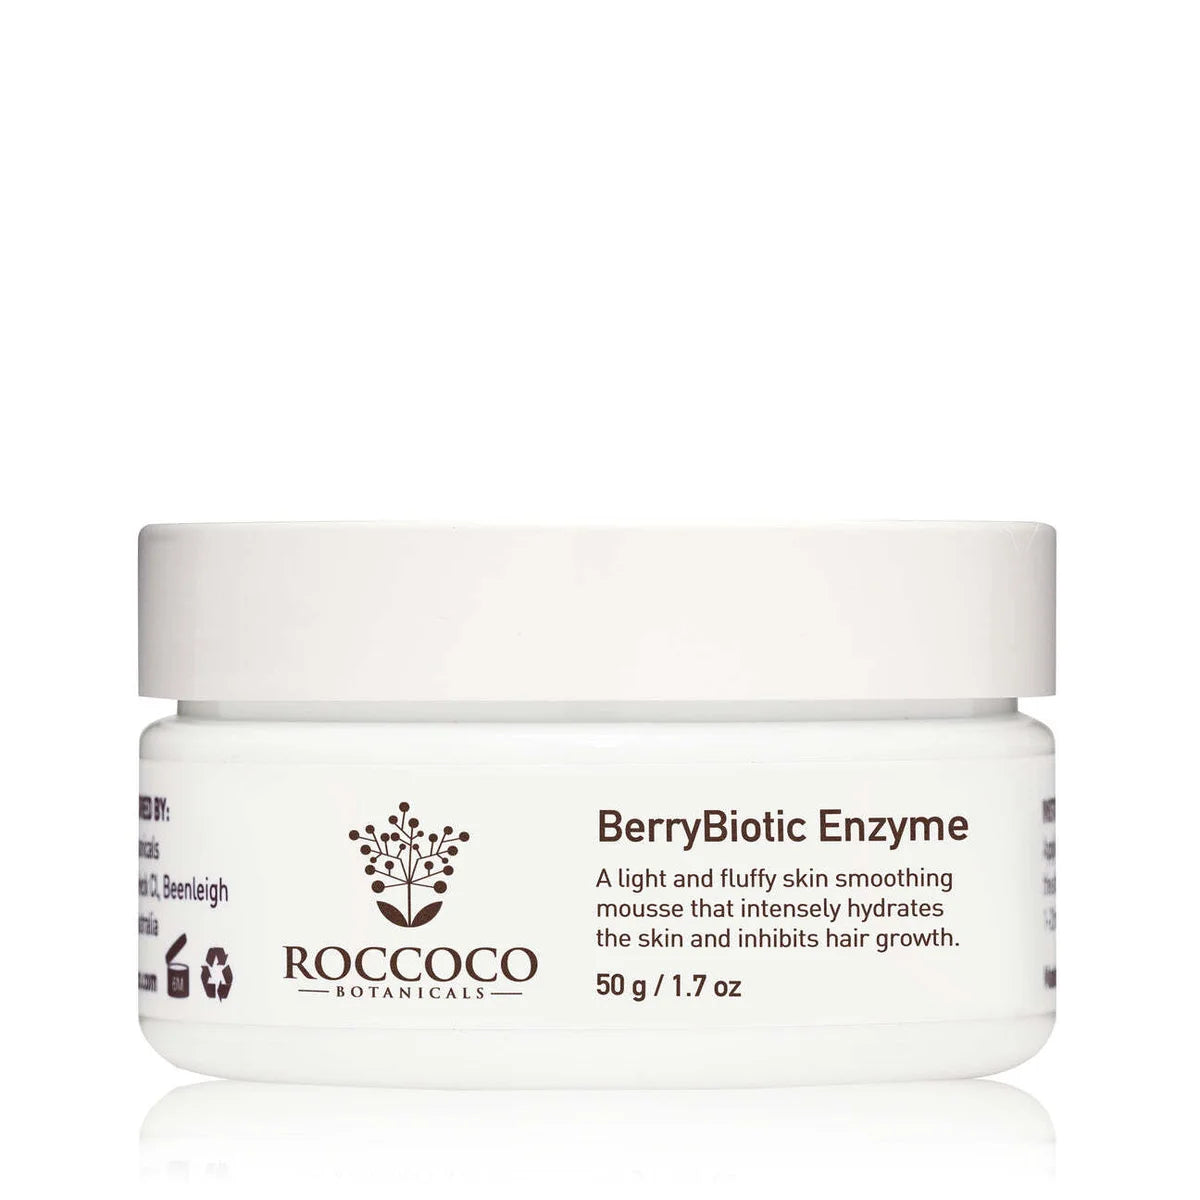 Roccoco BerryBiotic Enzyme